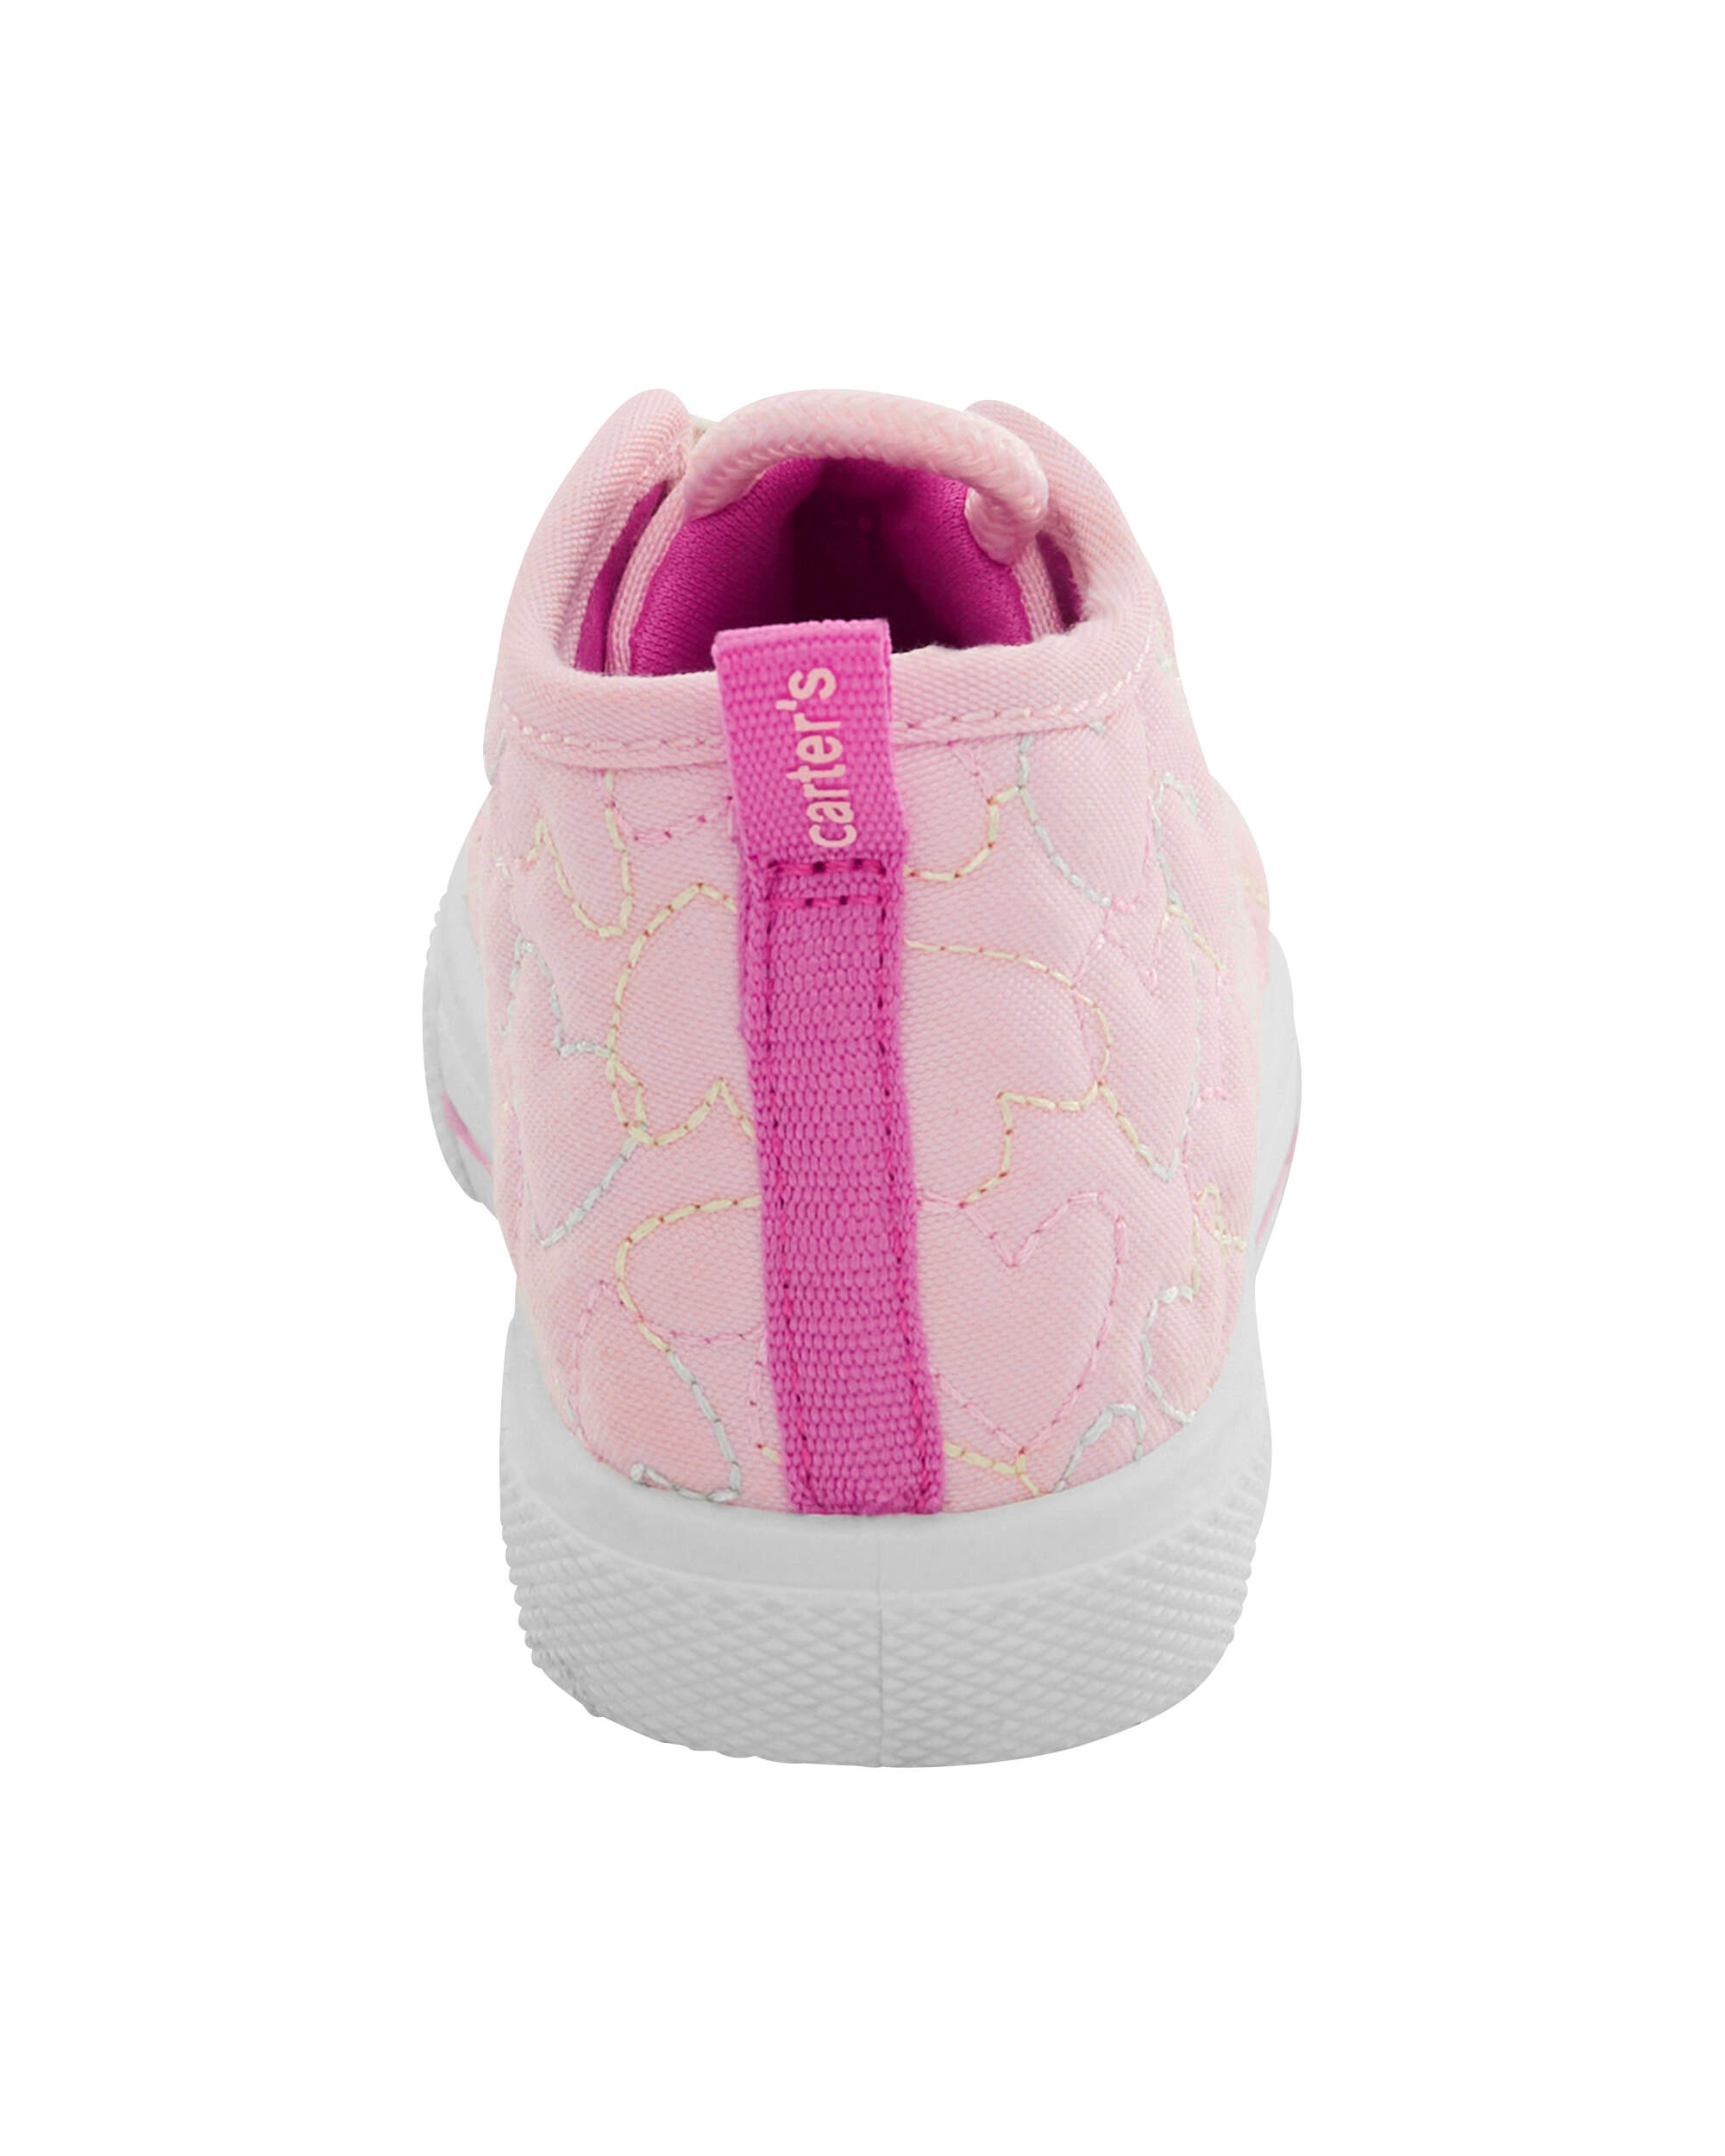 Toddler Heart Print Sneakers